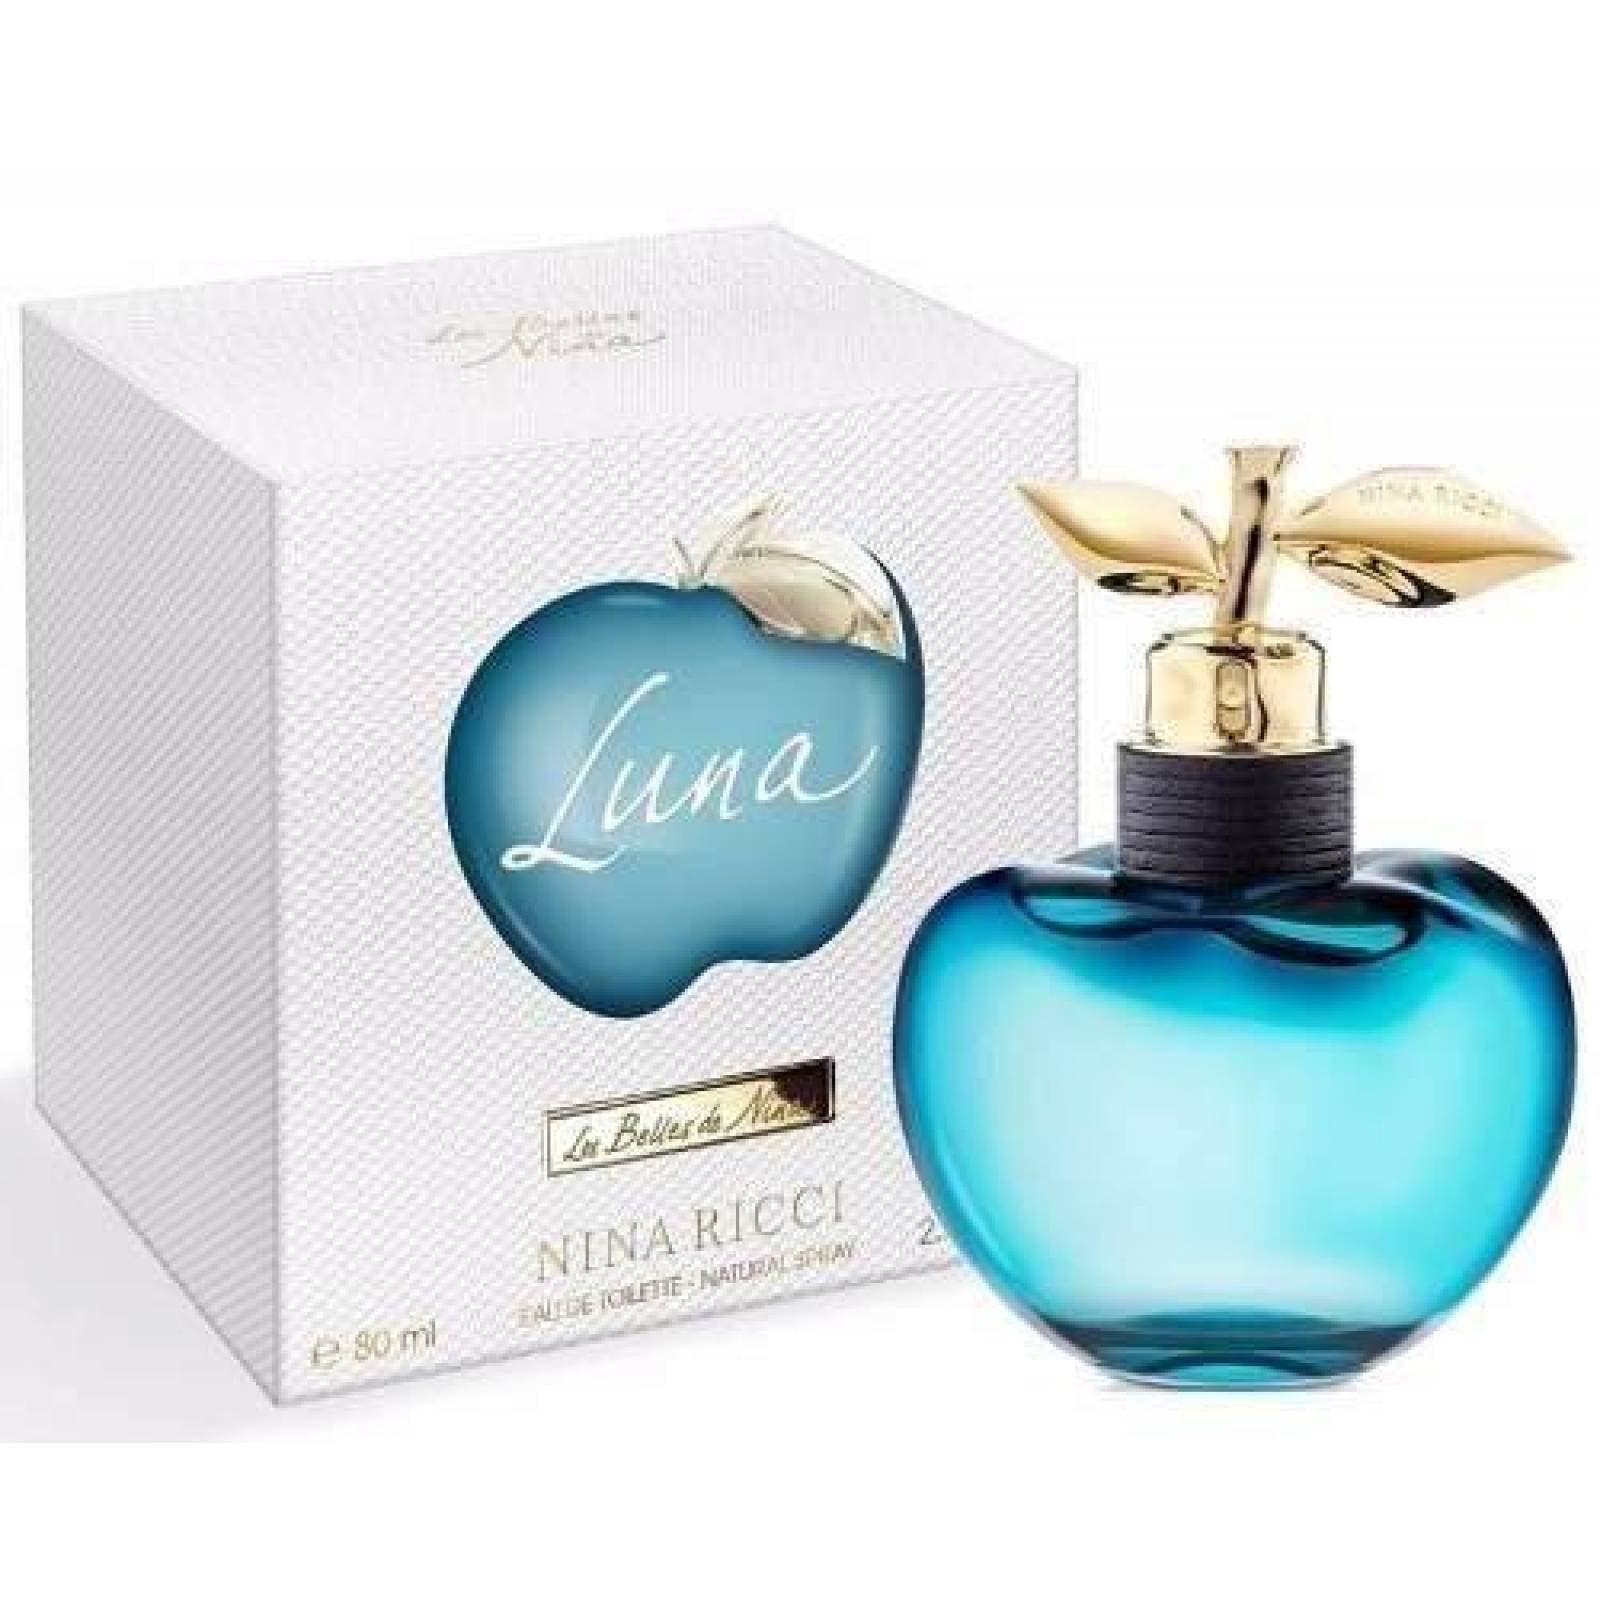 Luna Dama Les Belles De Nina Ricci 80 Ml Edt Spray